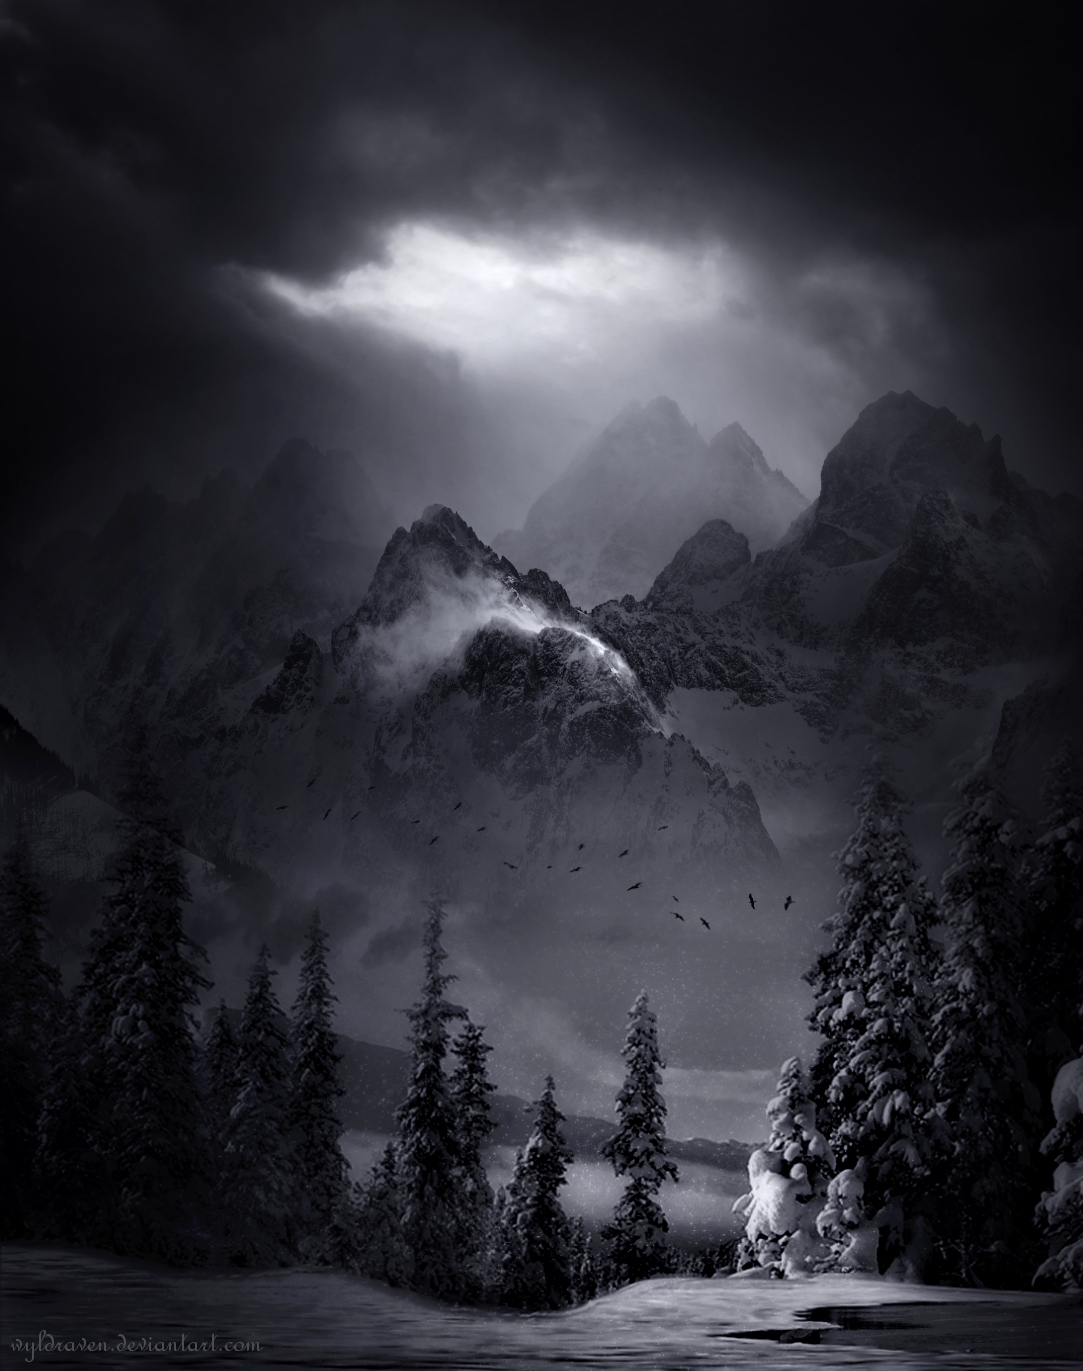 The Winter Kingdom by wyldraven on DeviantArt